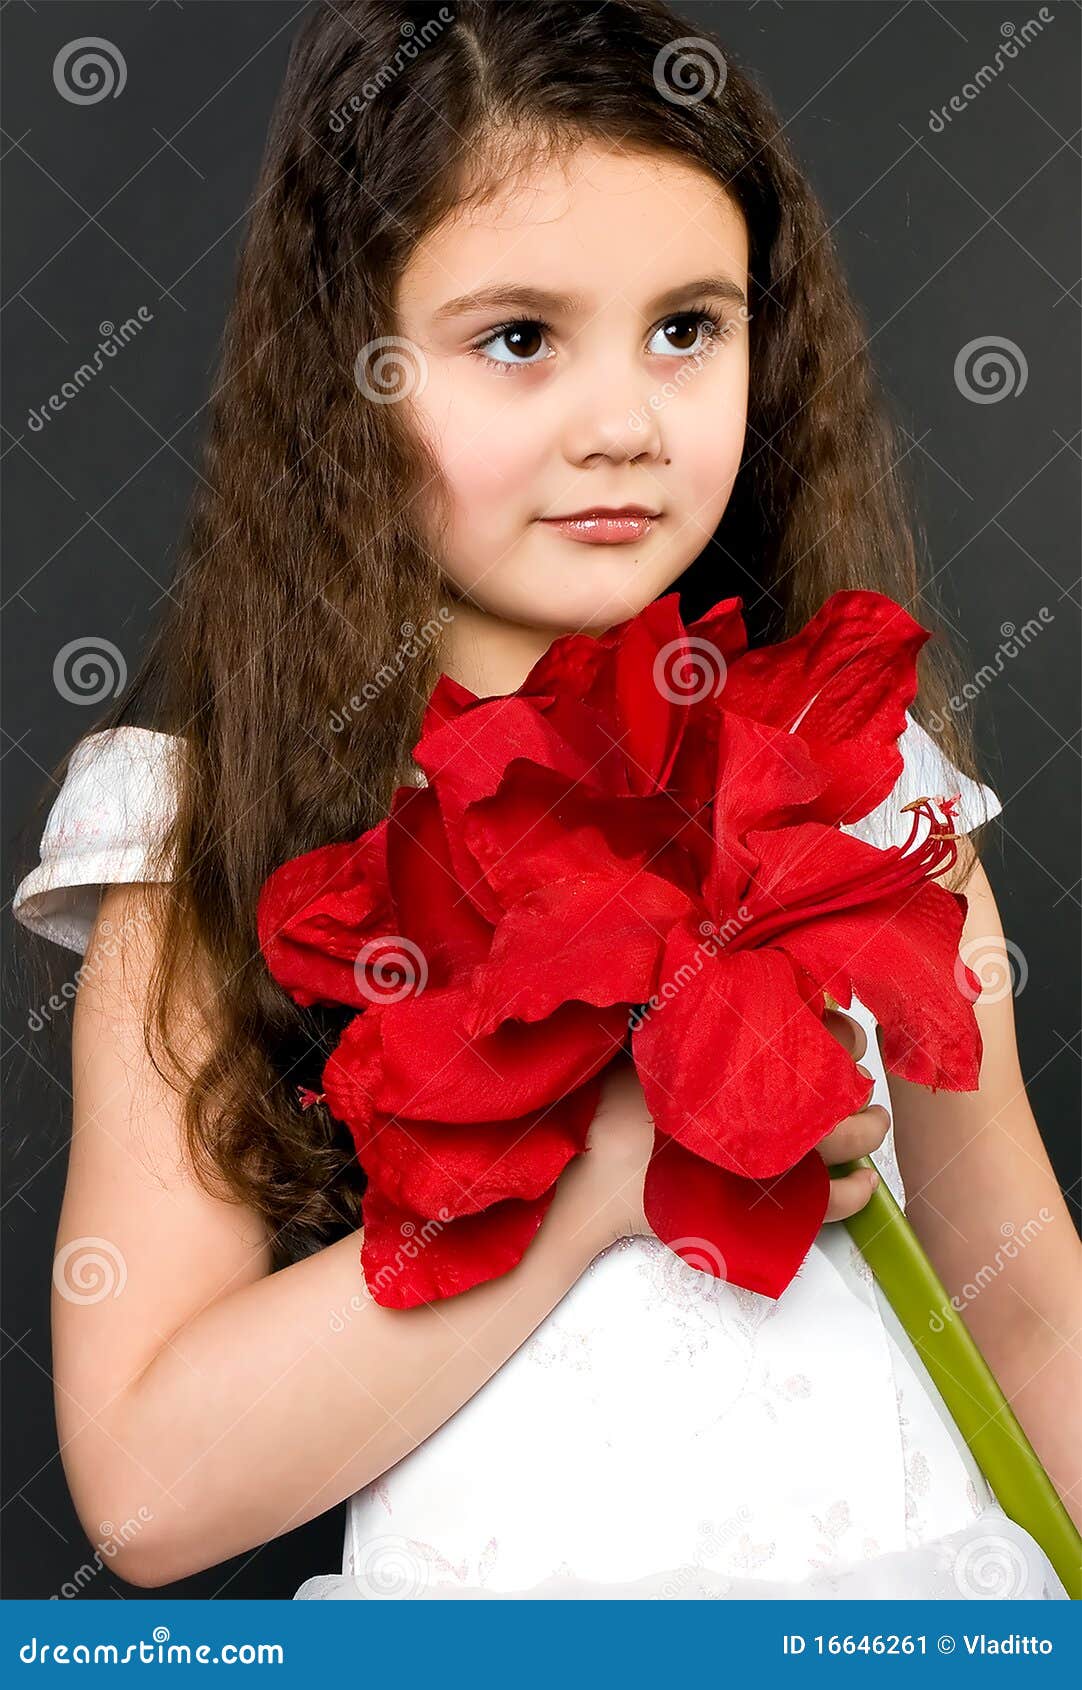 416,224 Beautiful White Caucasian Girl Child Stock Photos - Free ...